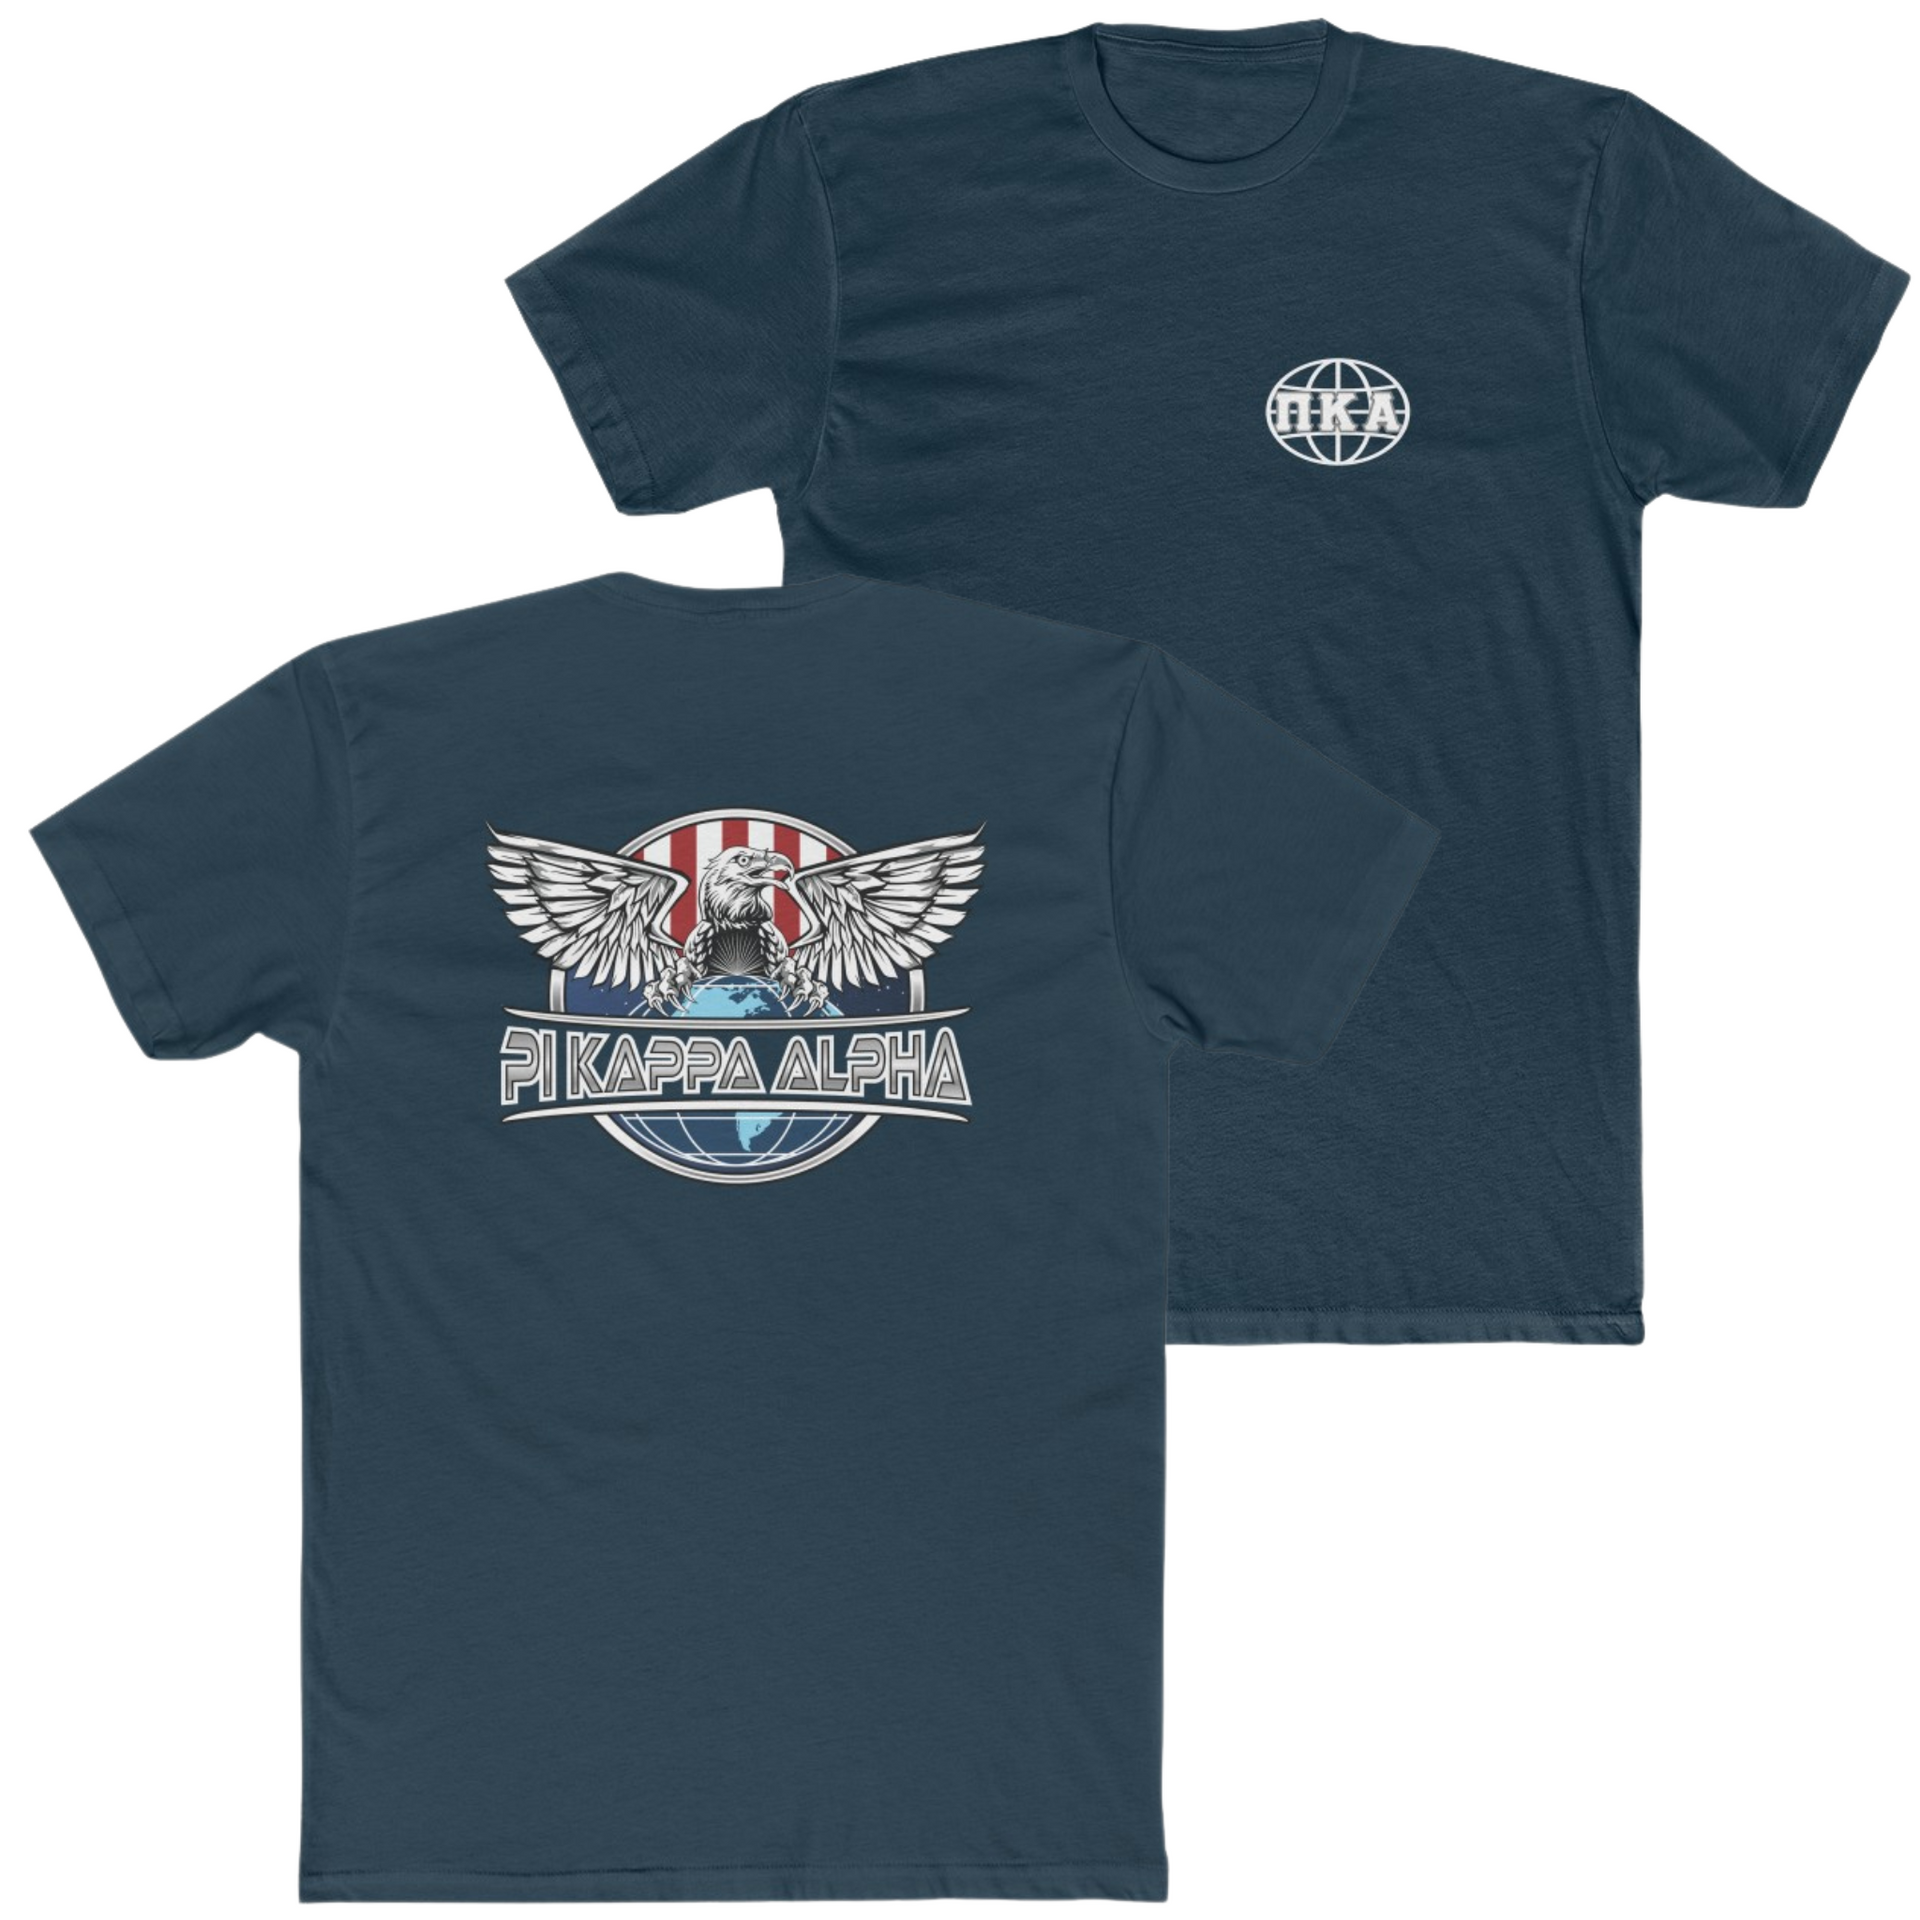 Navy Pi Kappa Alpha Graphic T-Shirt | The Fraternal Order | Pi kappa alpha fraternity shirt 